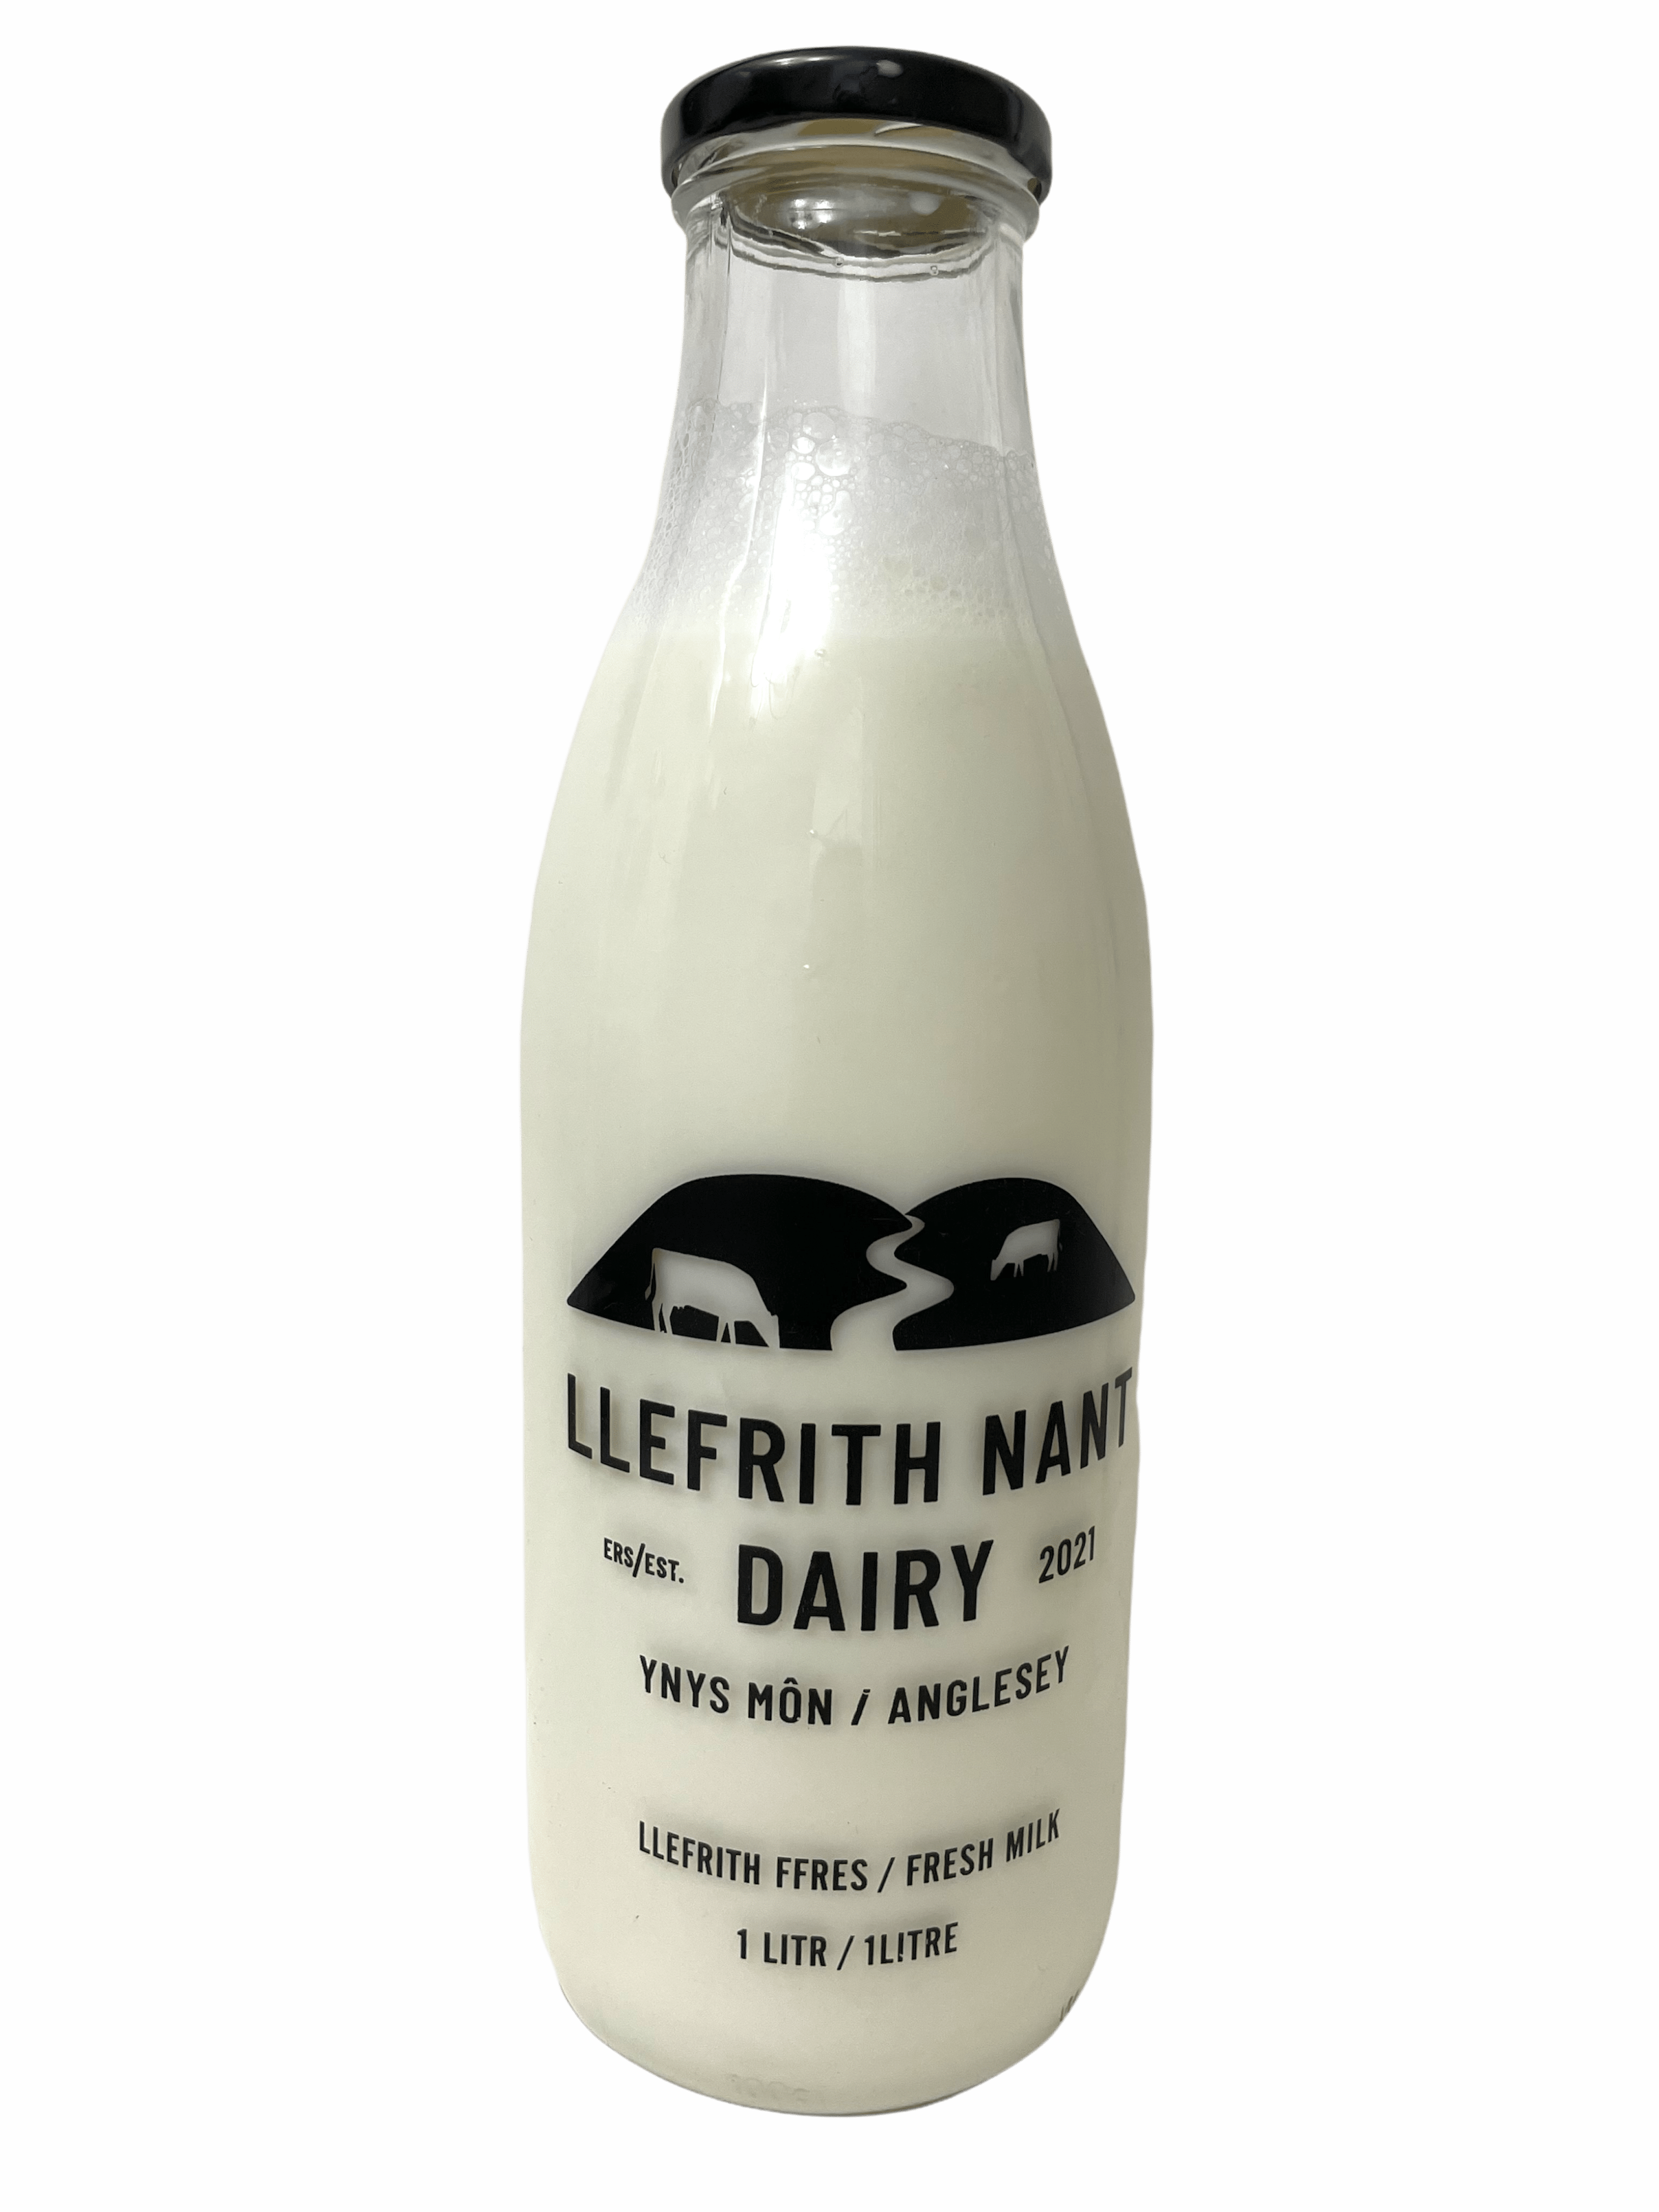 Llefrith Nant Dairy - Kelis.info